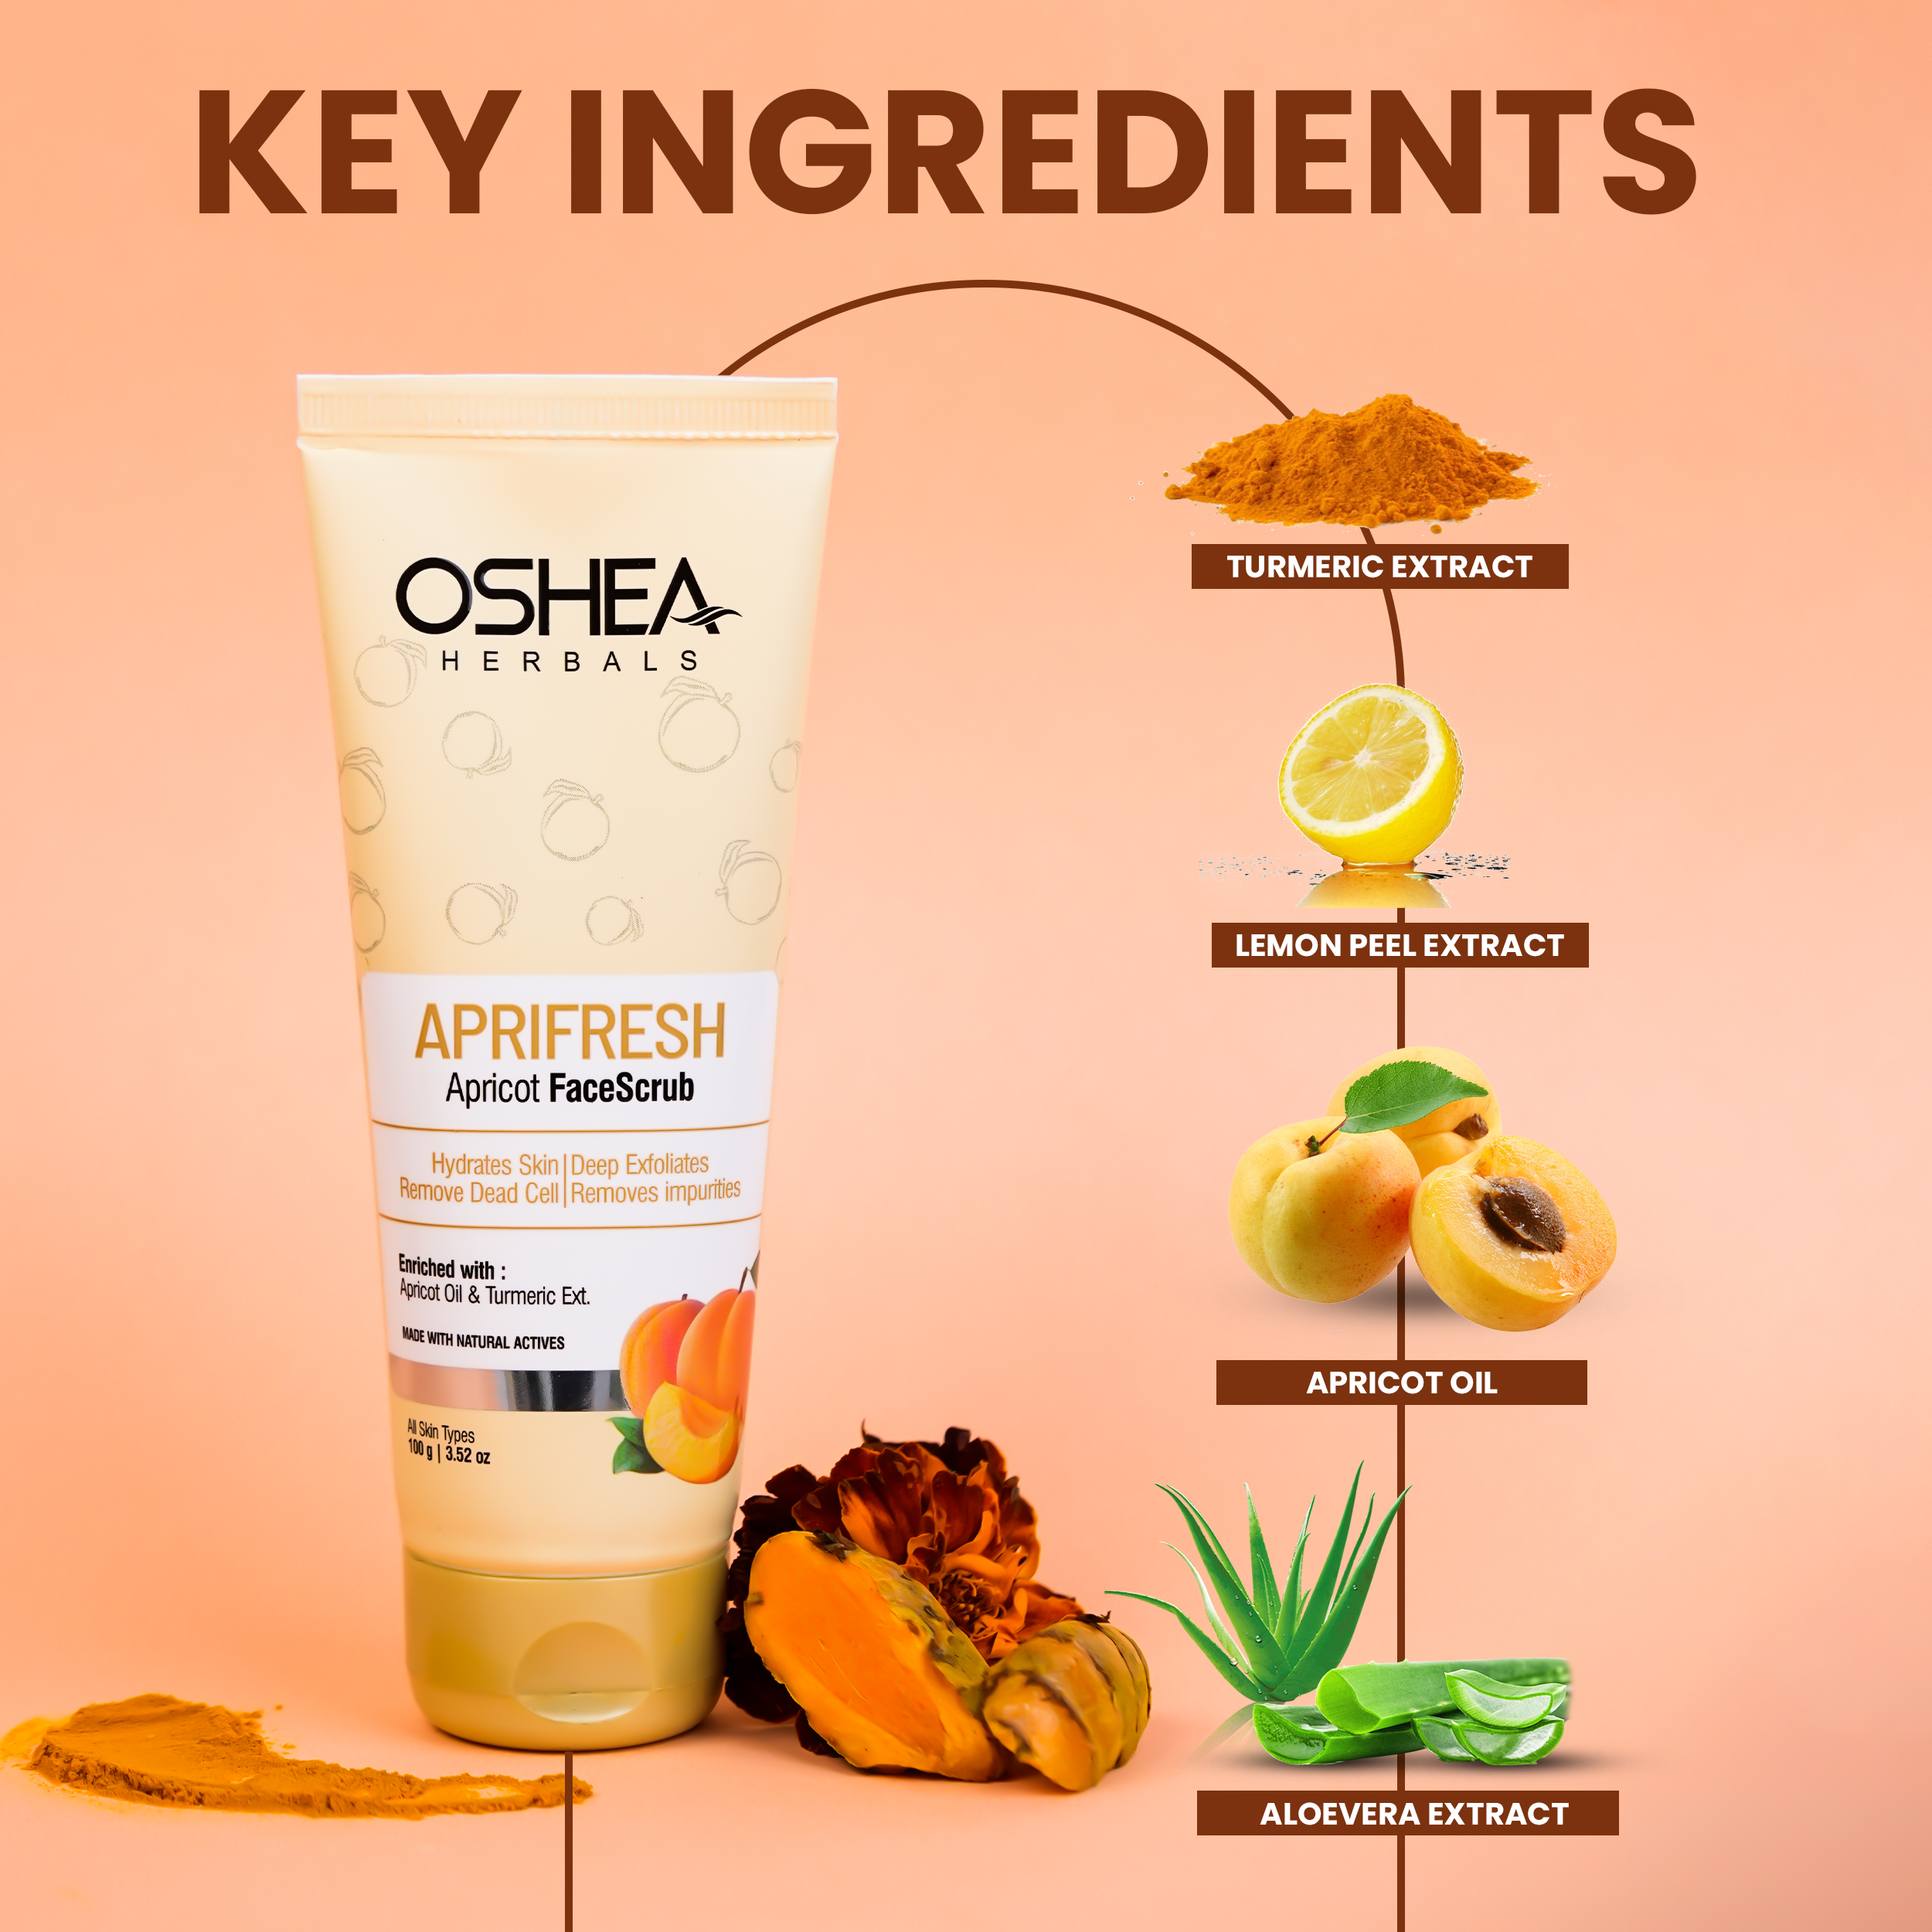 Key Ingredients Aprifresh Apricot Face Scrub Oshea Herbals